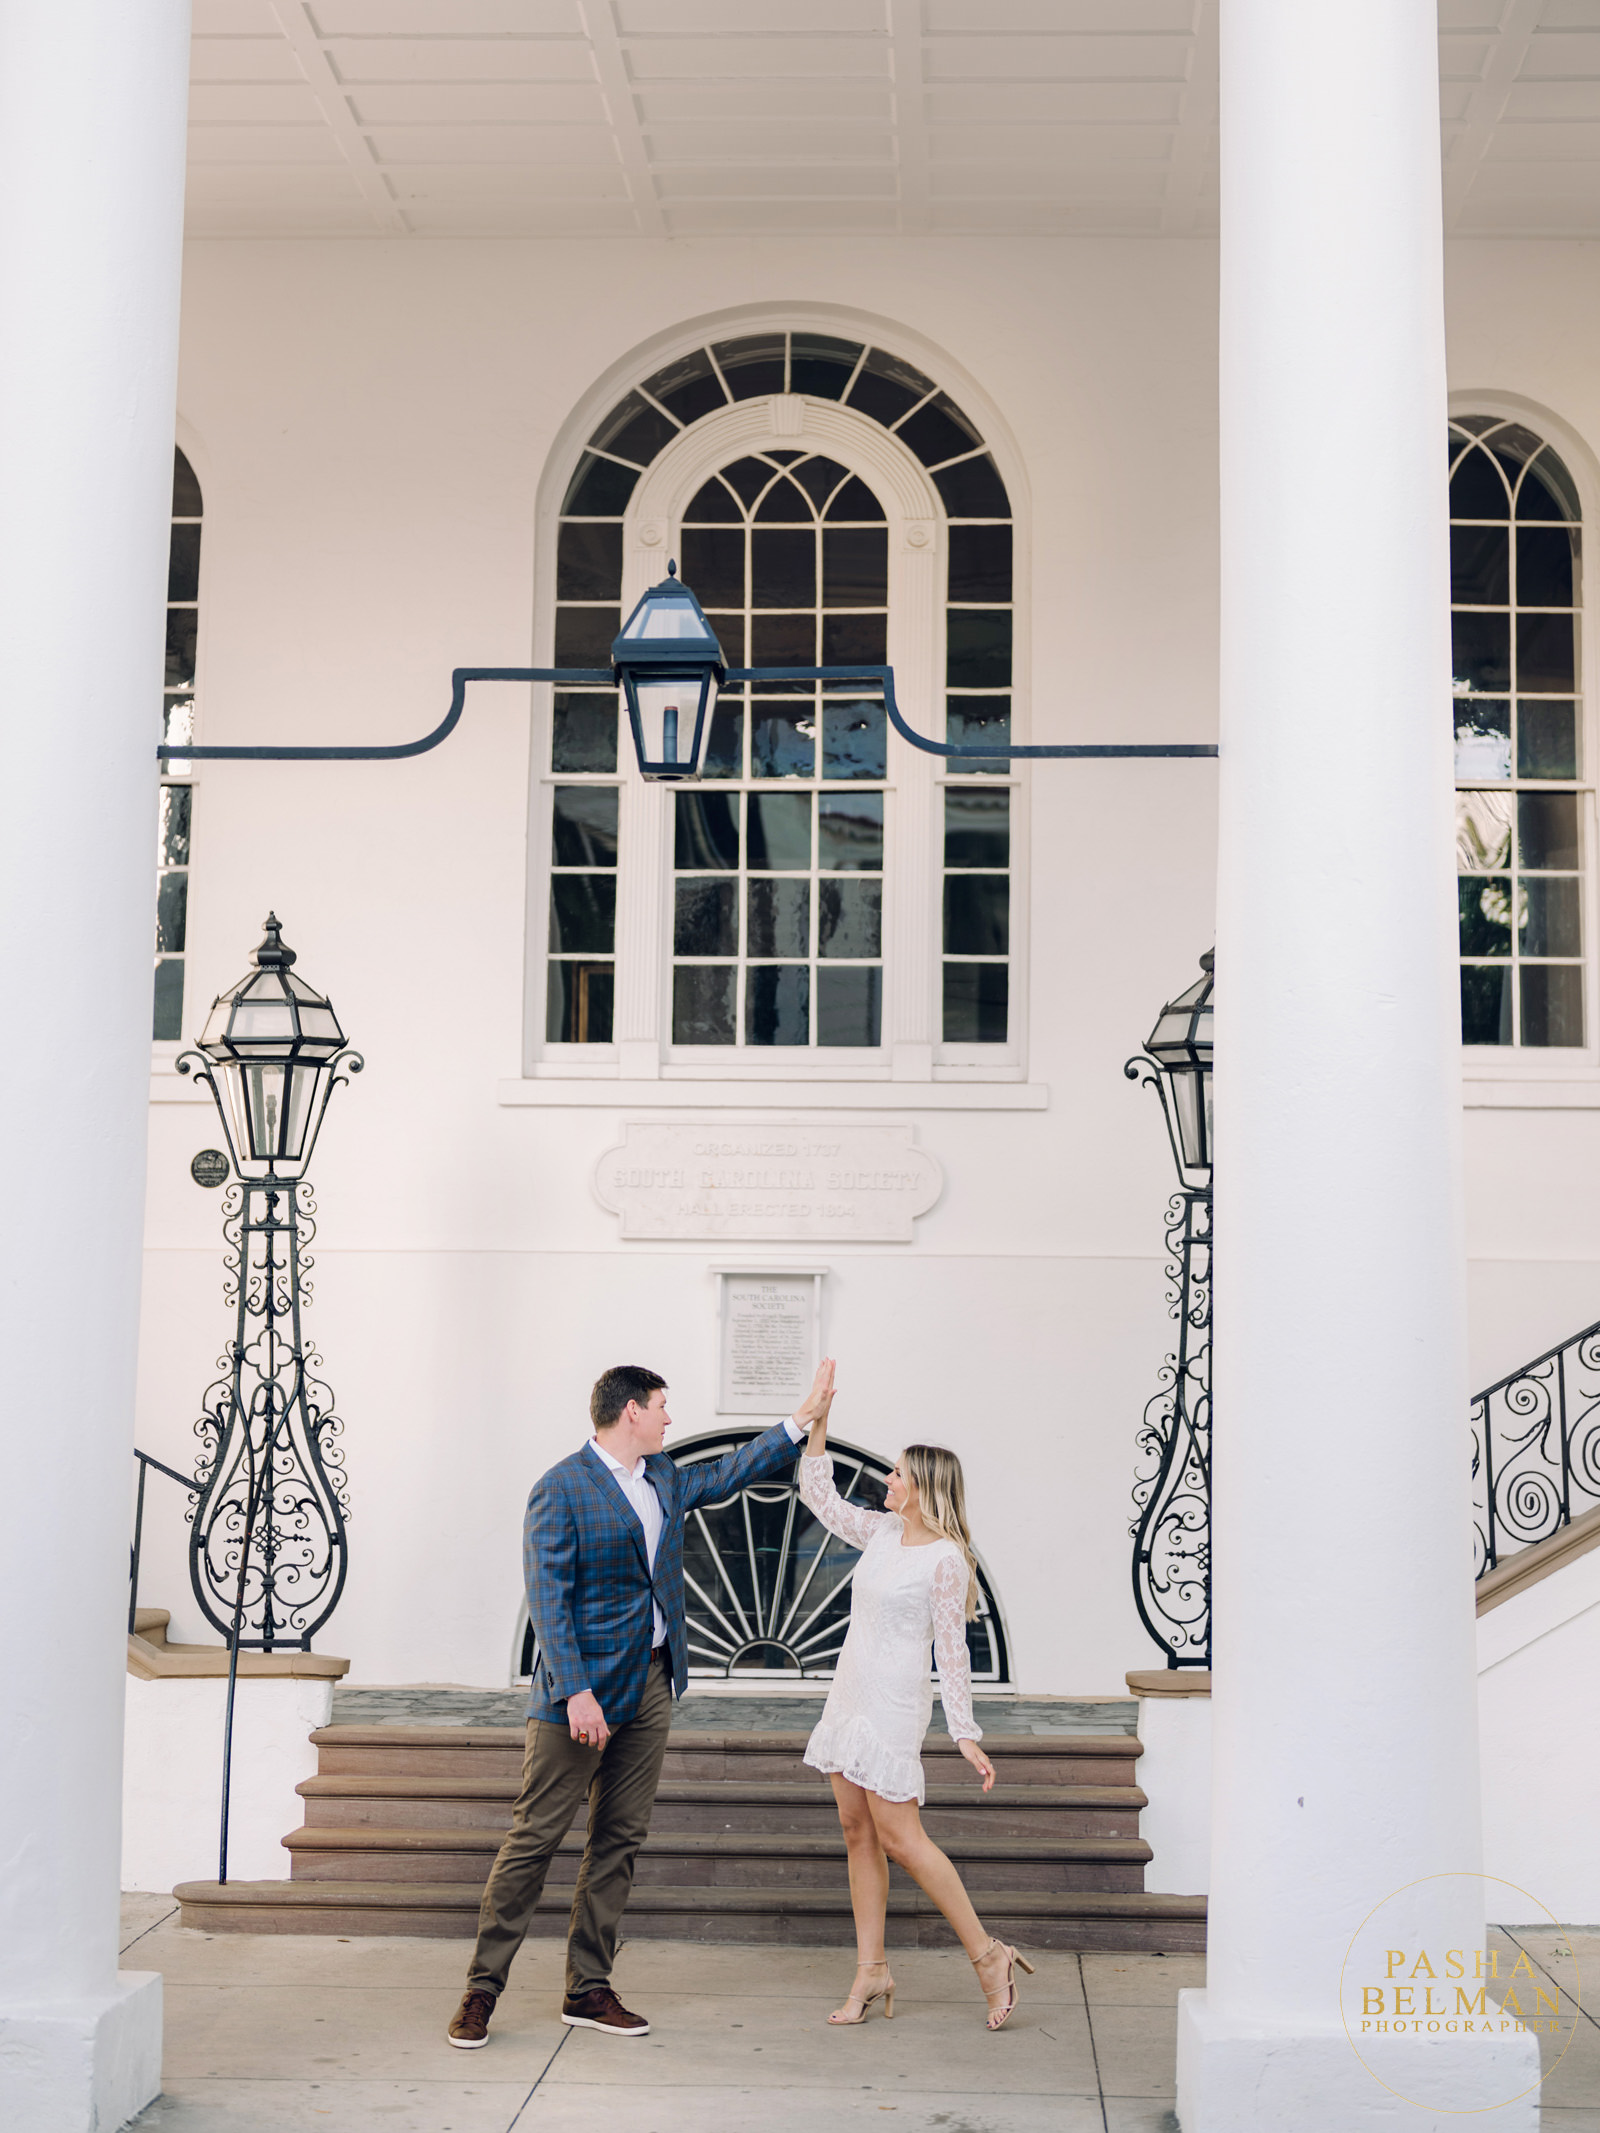 Top Charleston Engagement Photography Location Ideas 